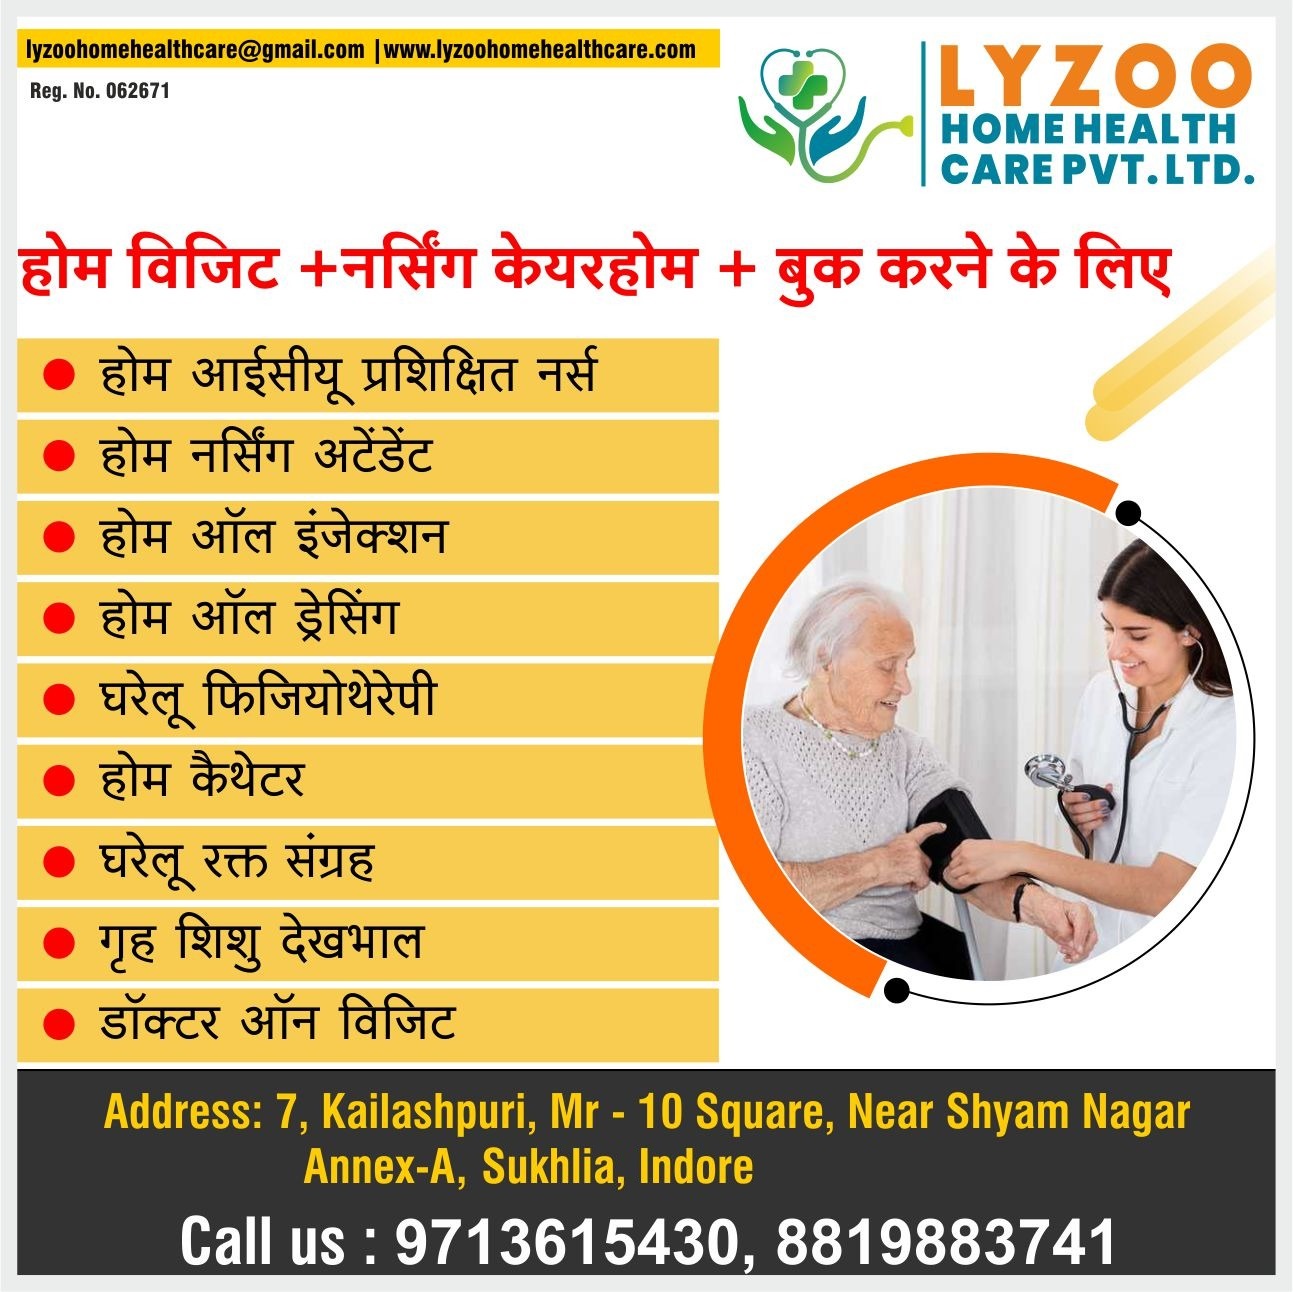 Best Nursing Care Services in Indore